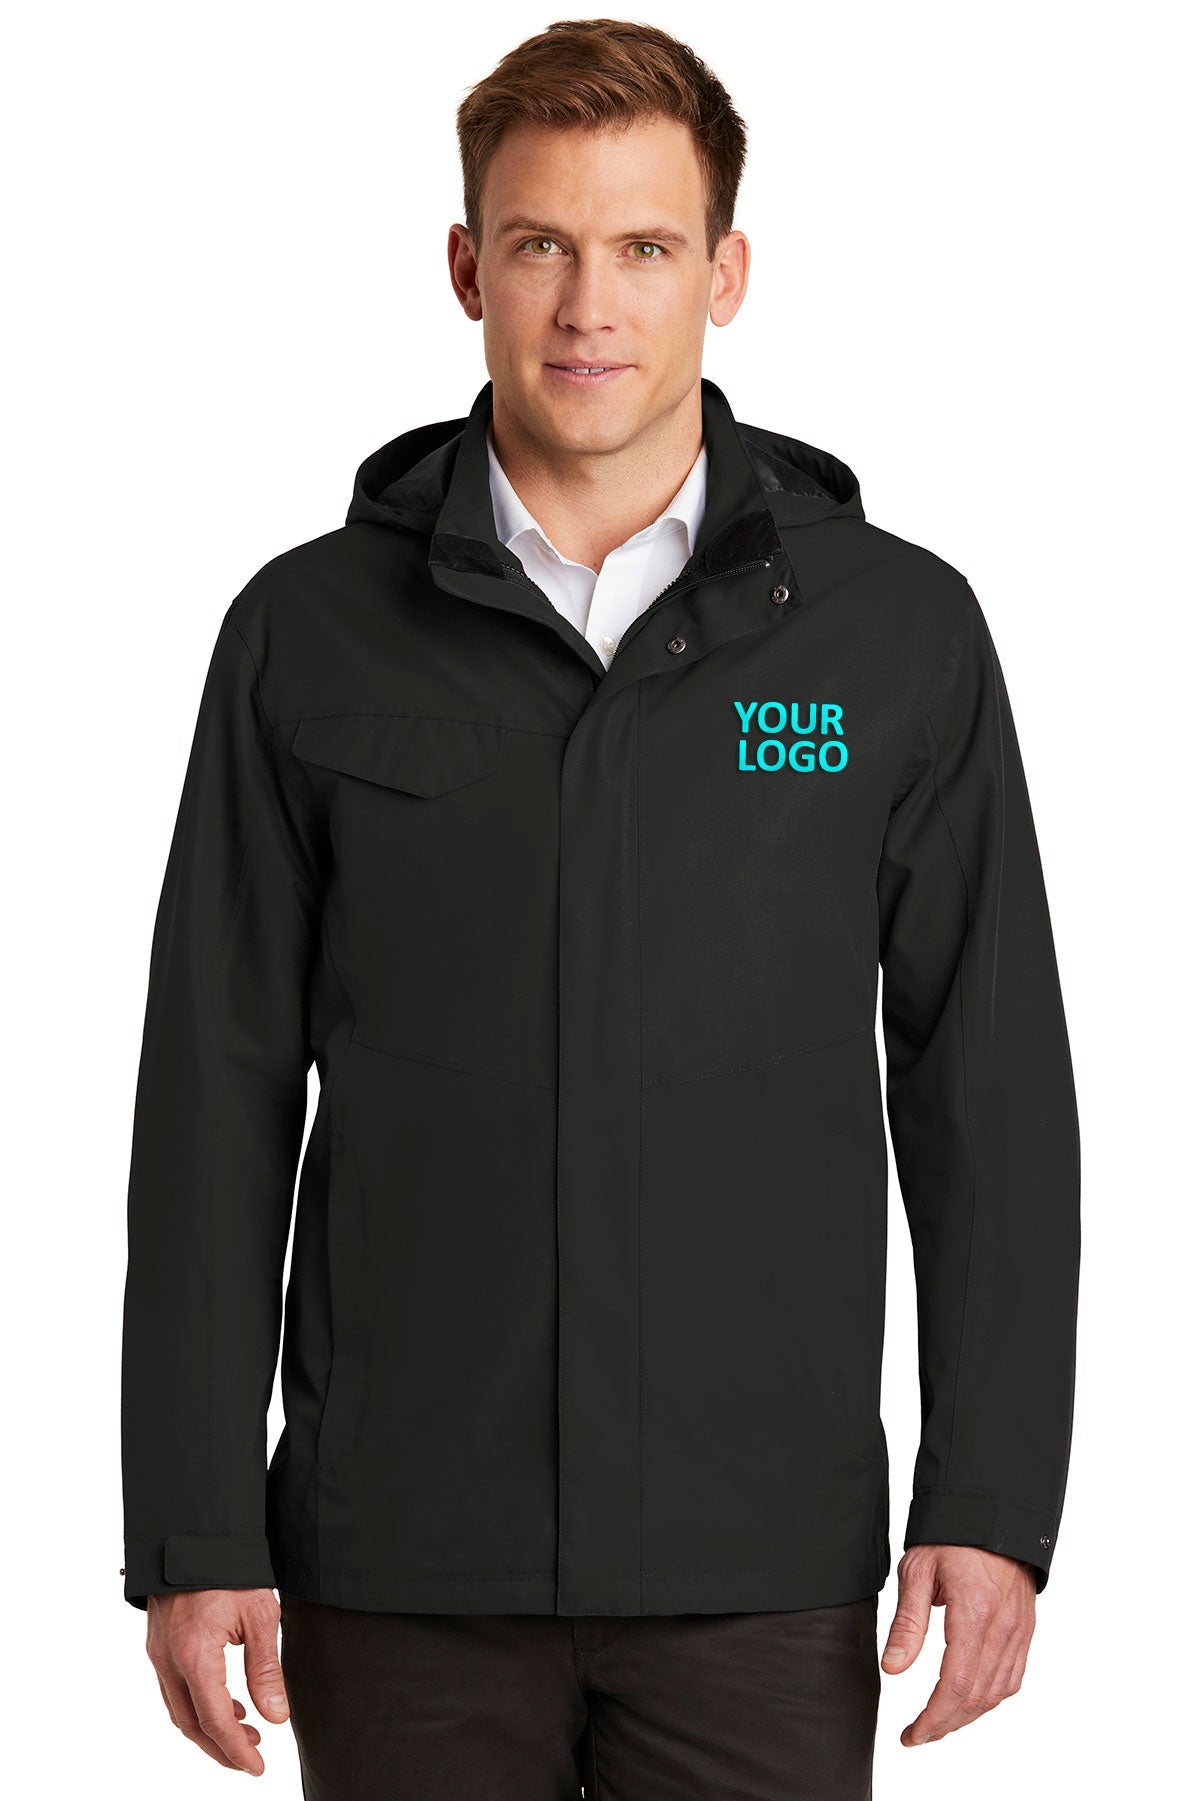 Port Authority Deep Black J900 custom logo jackets